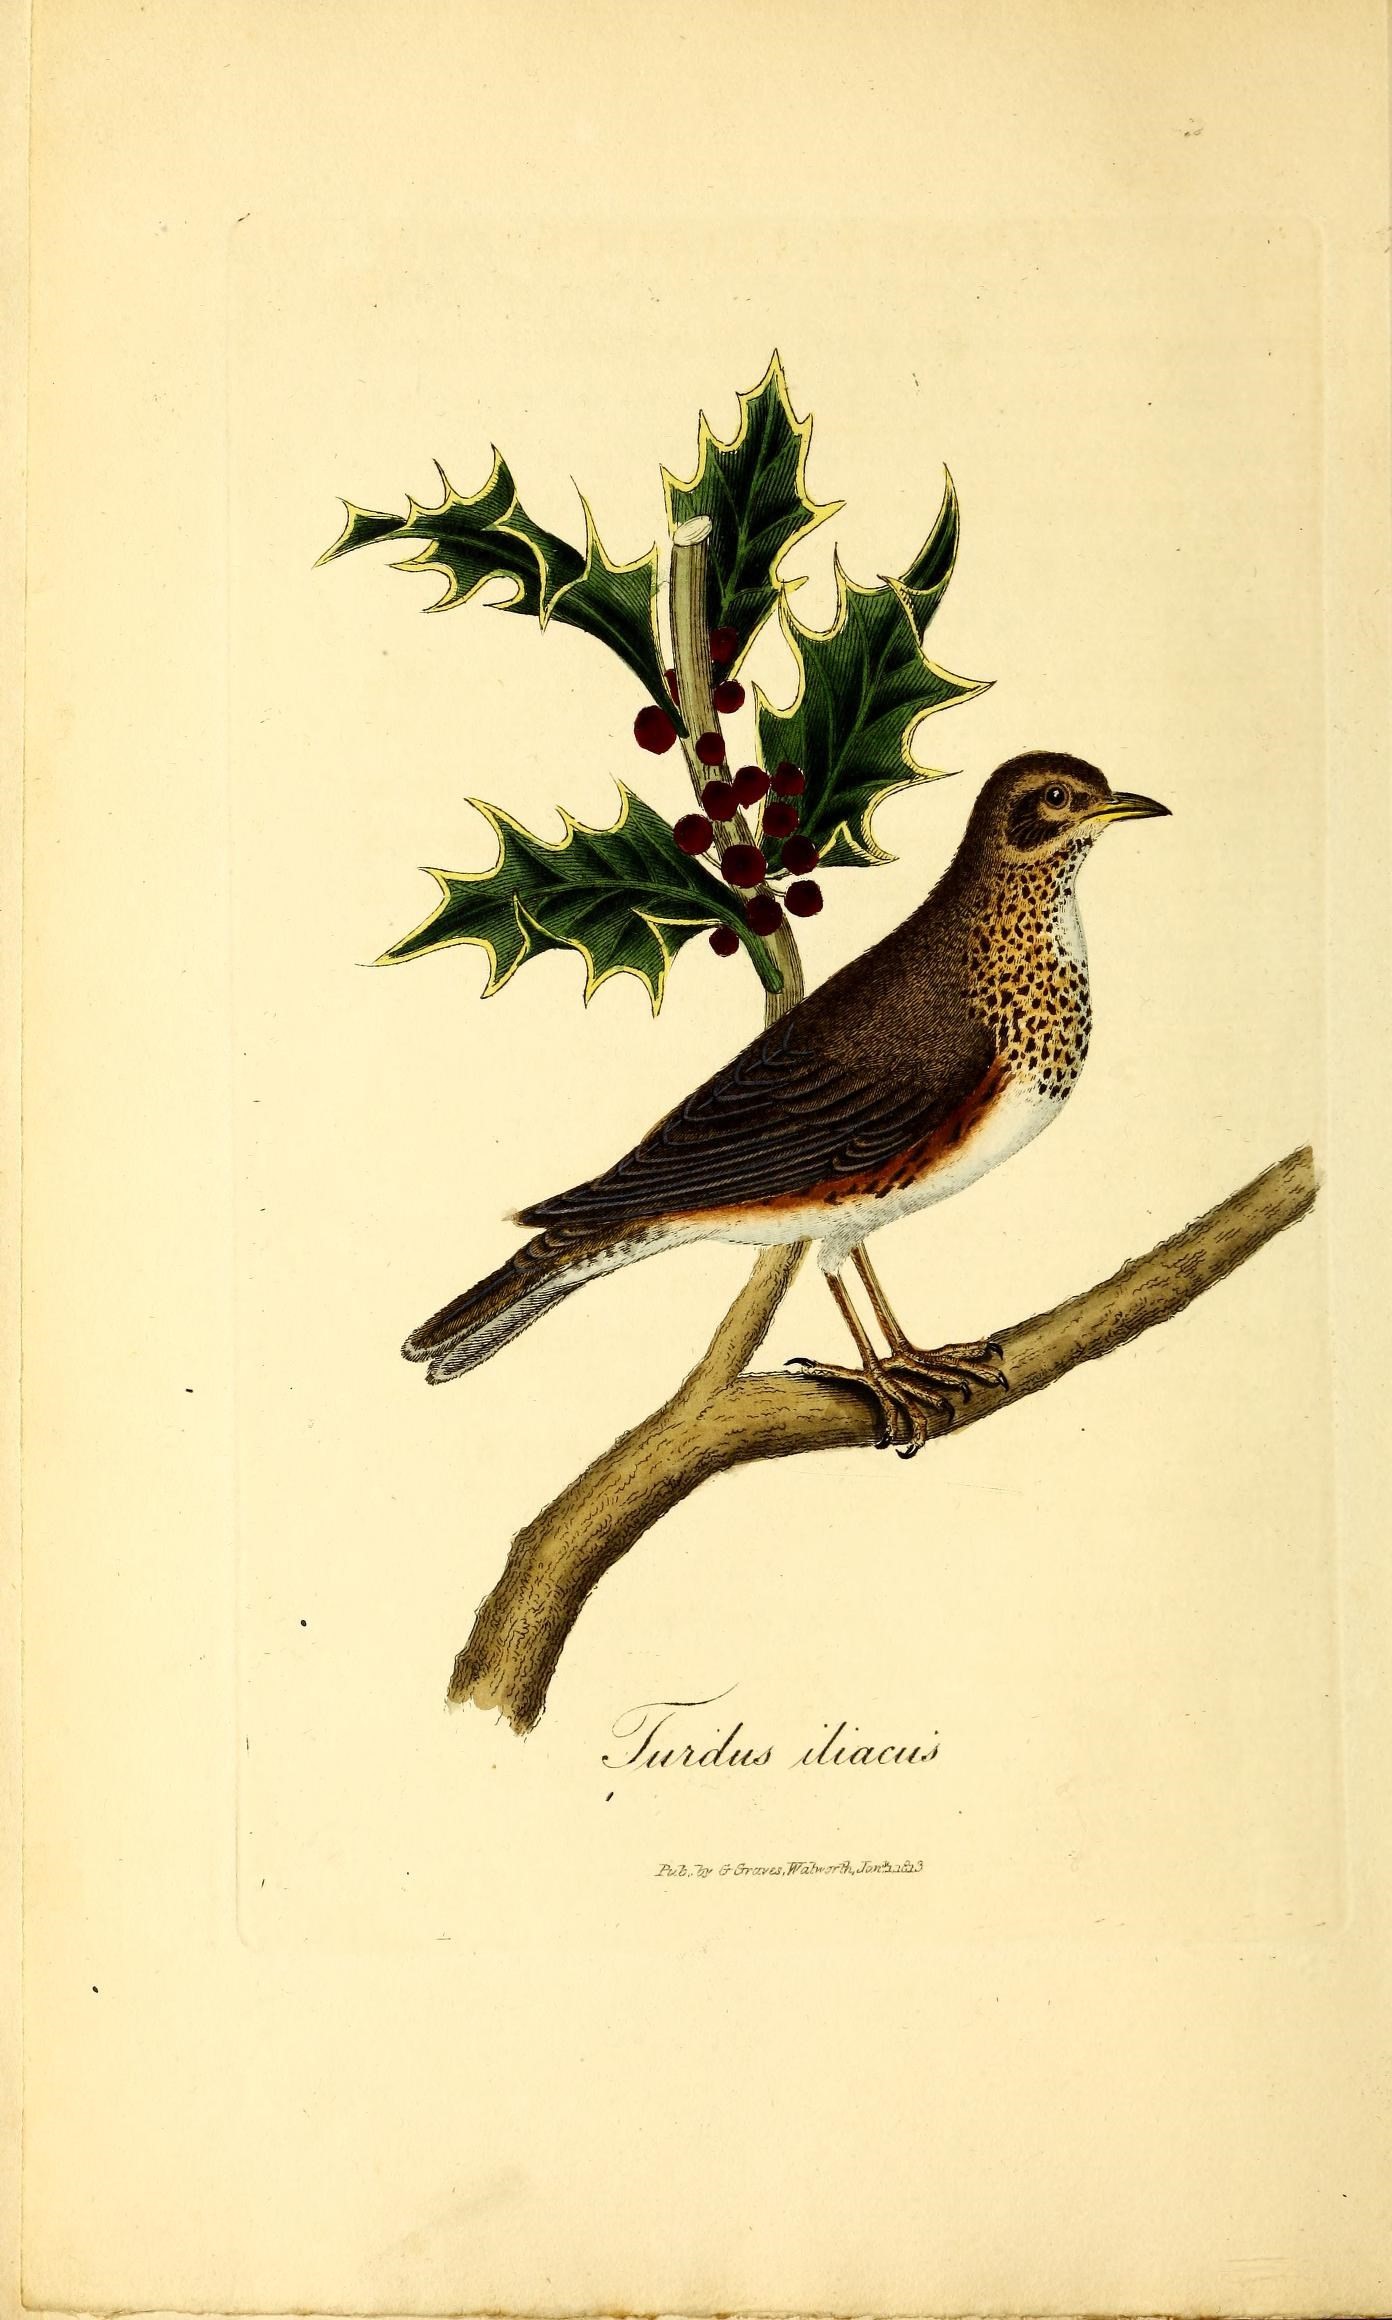 an antique christmas card depicting a bird on a tree limb